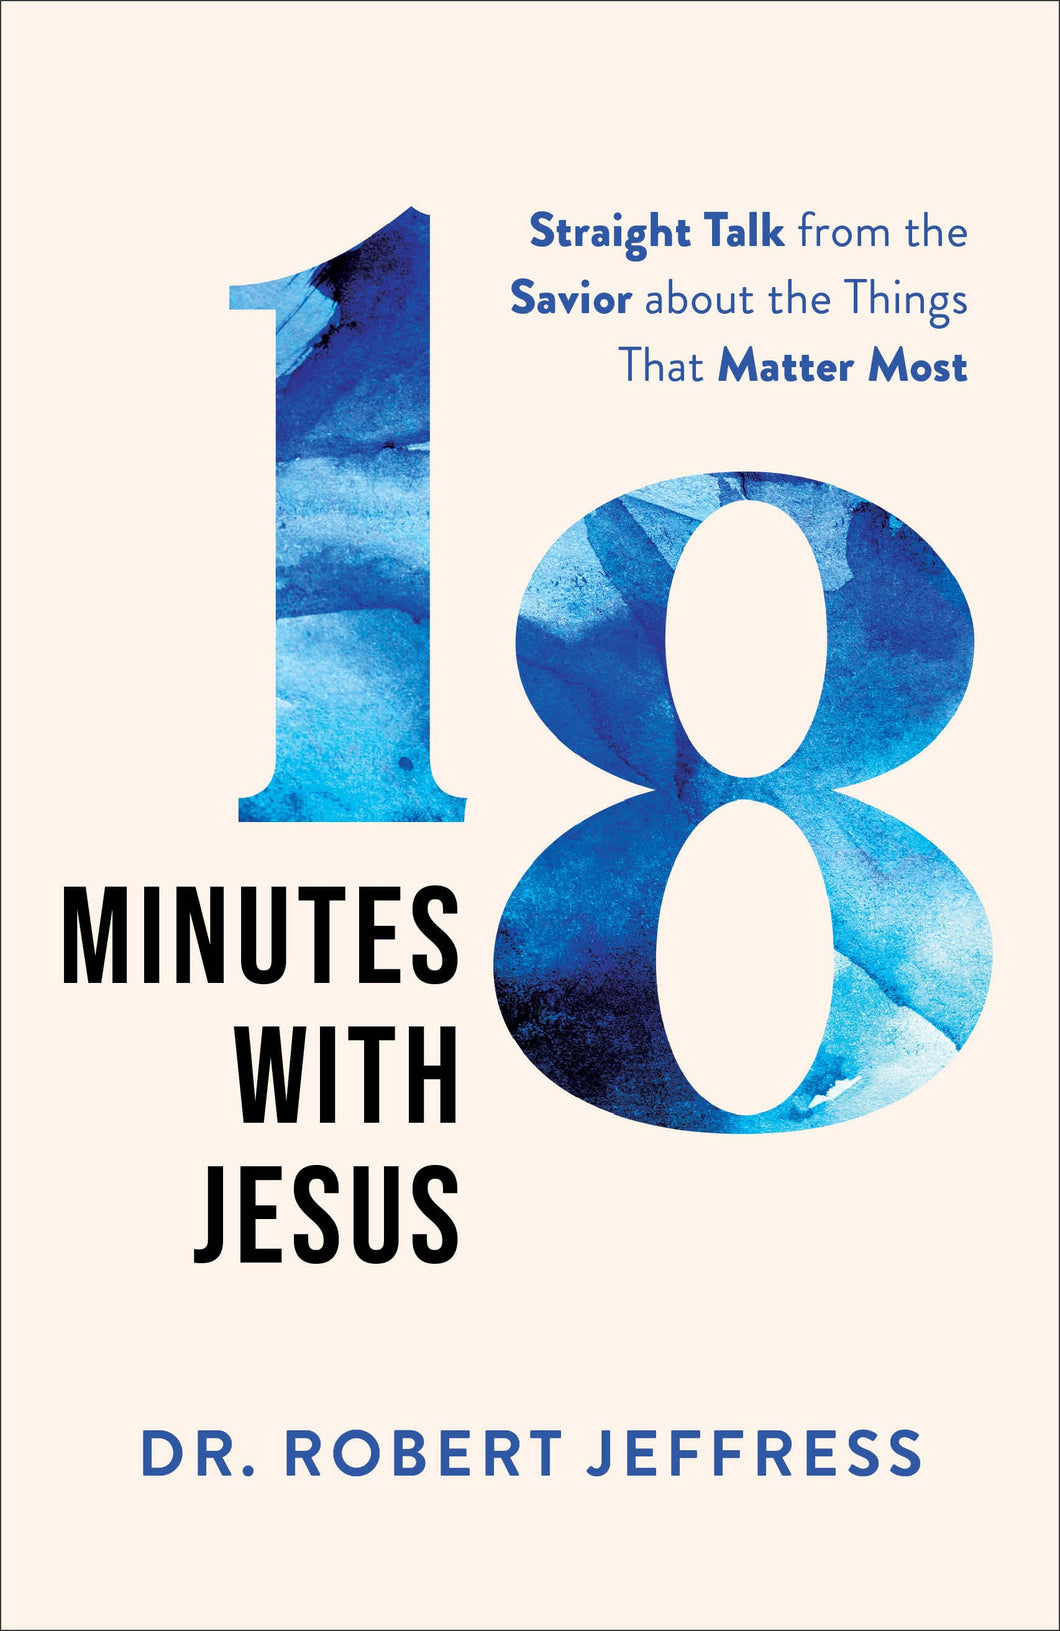 18 Minutes With Jesus